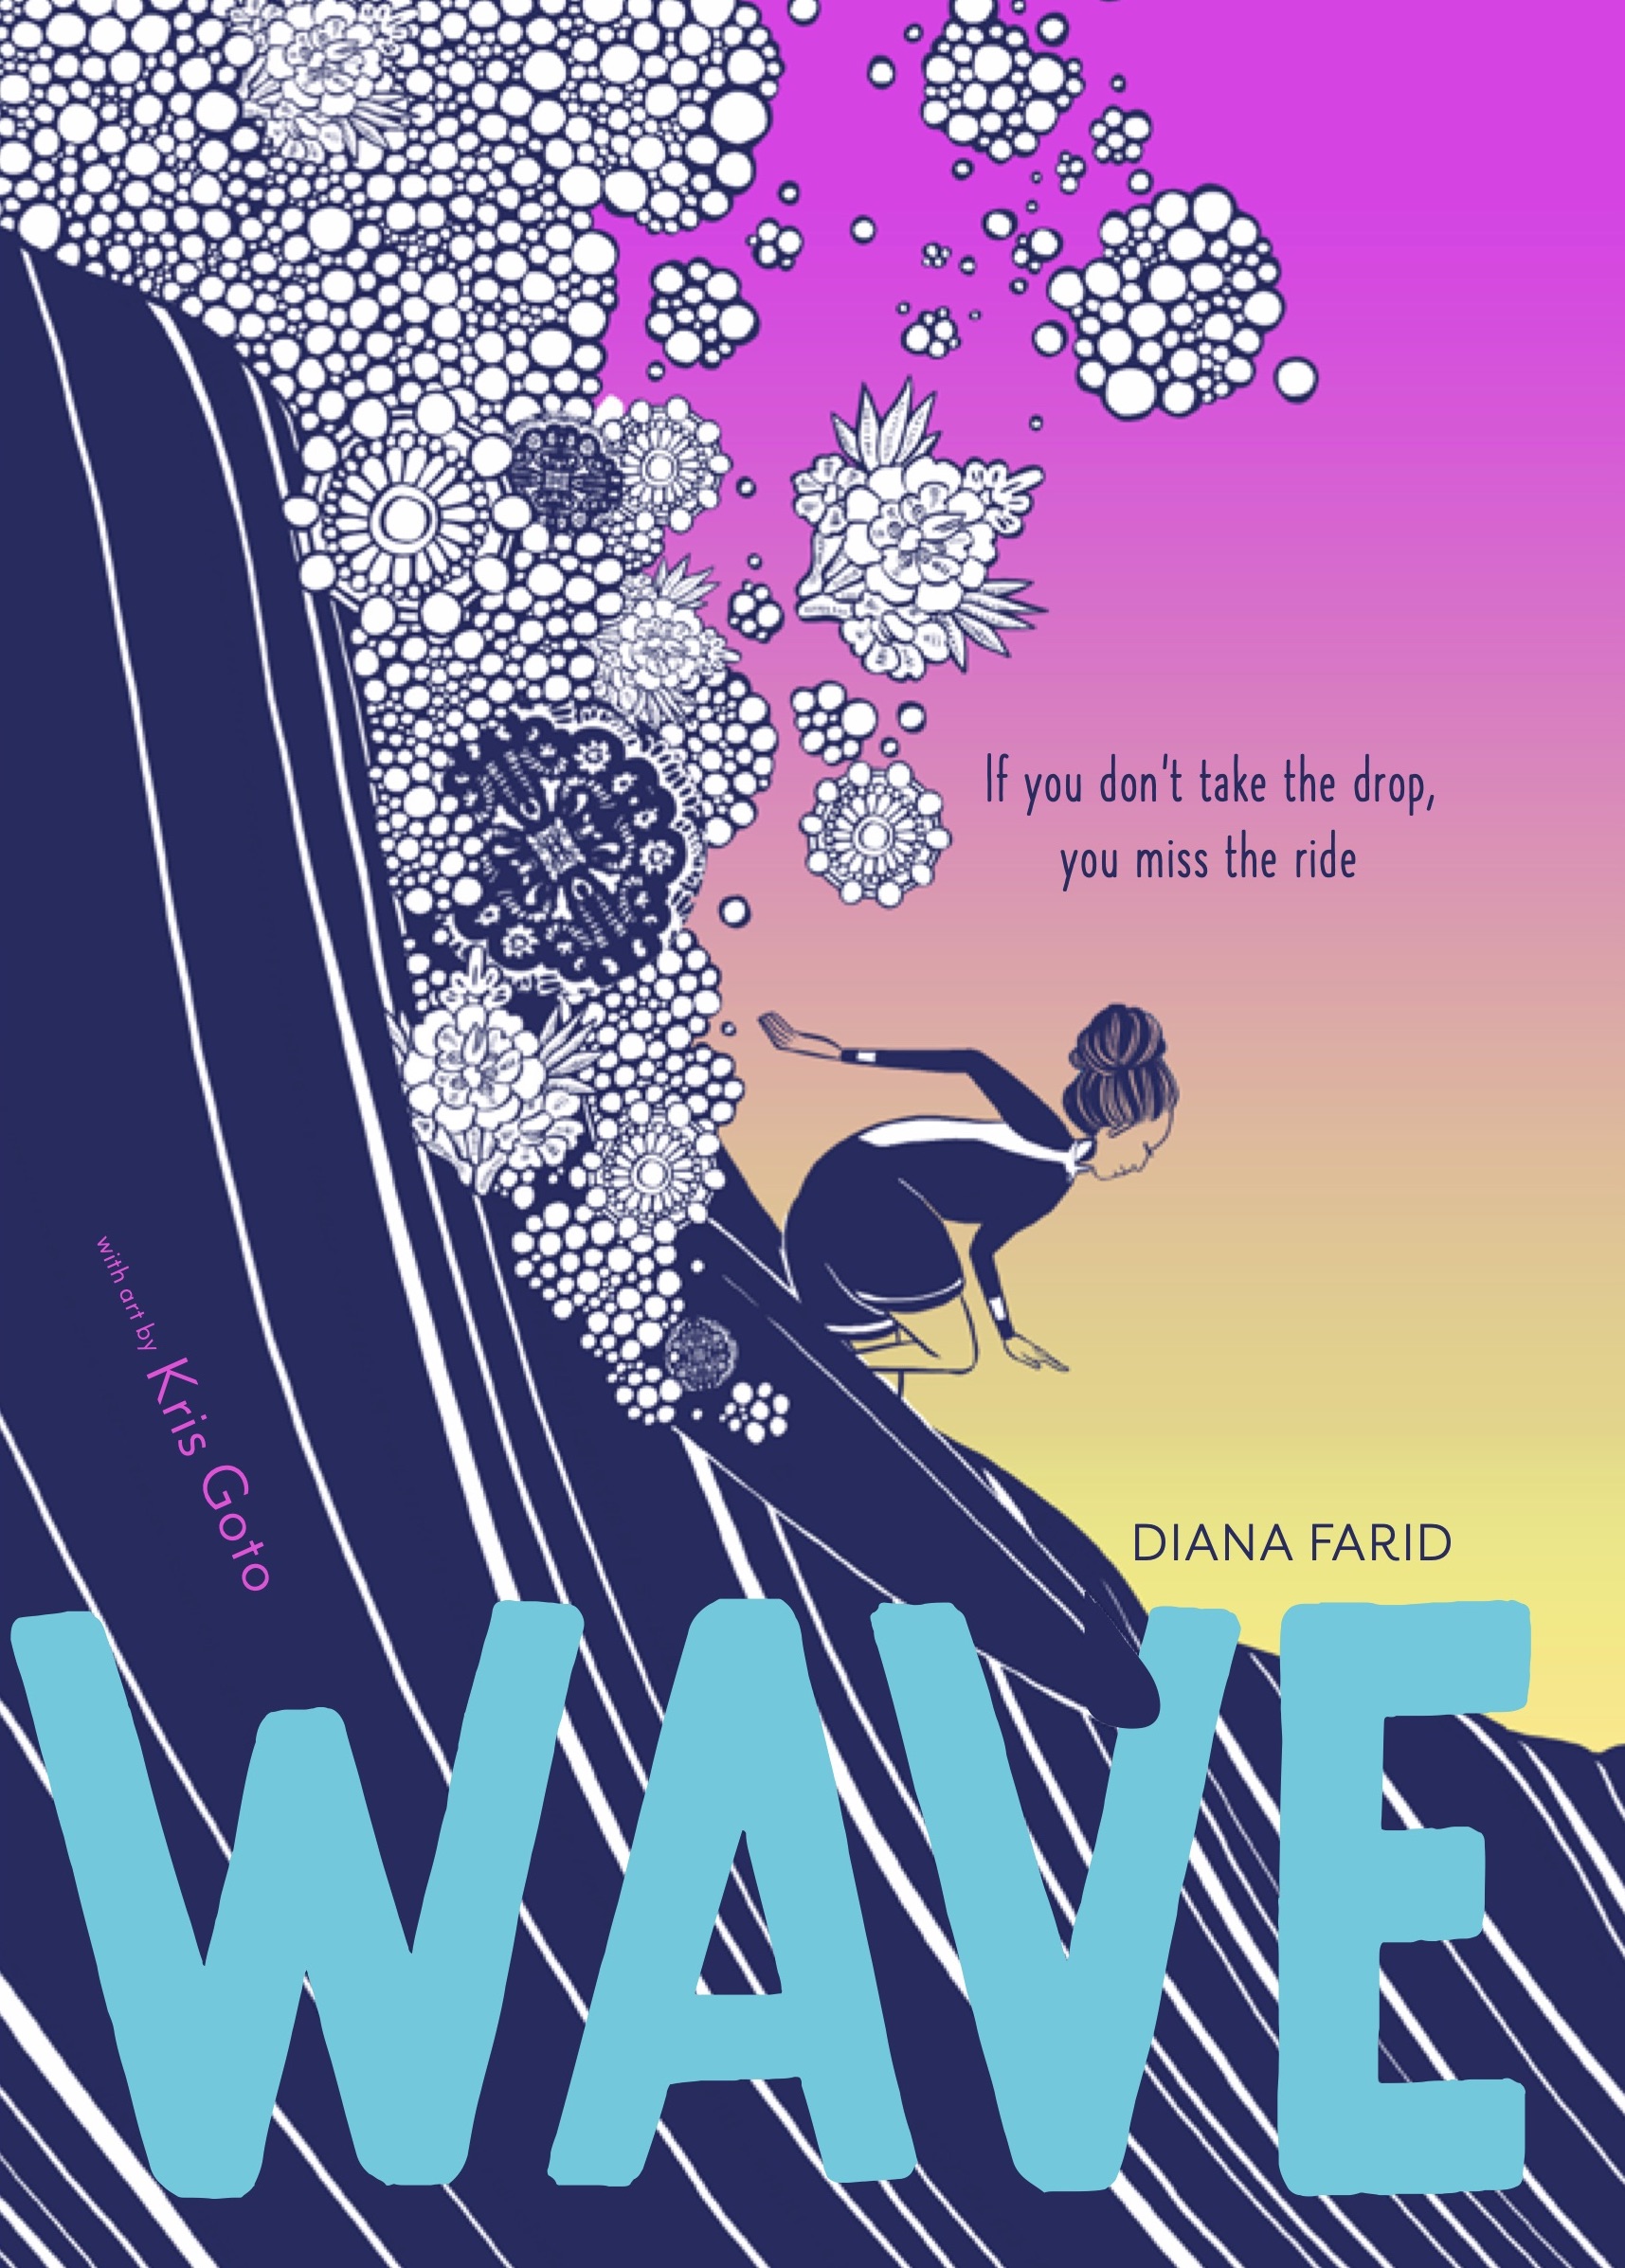 Wave